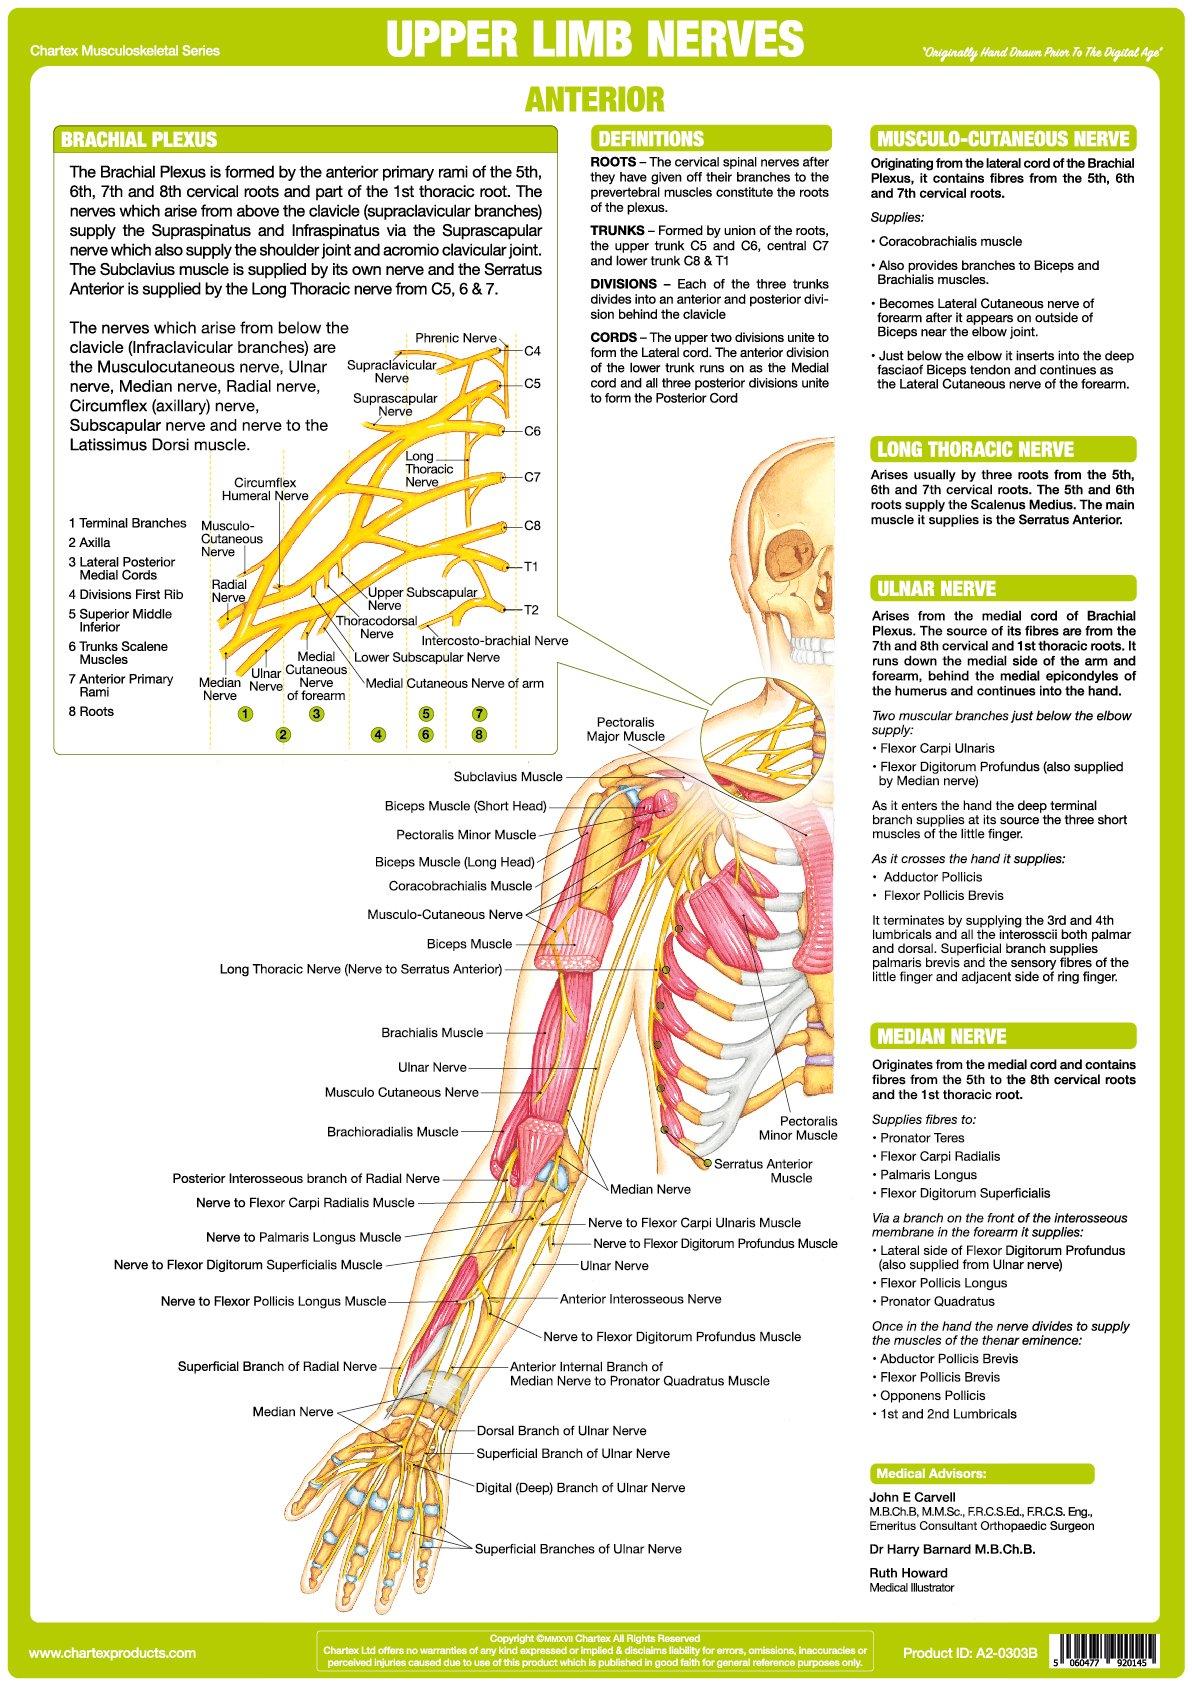 Upper Limb Nerve Chart - Anterior